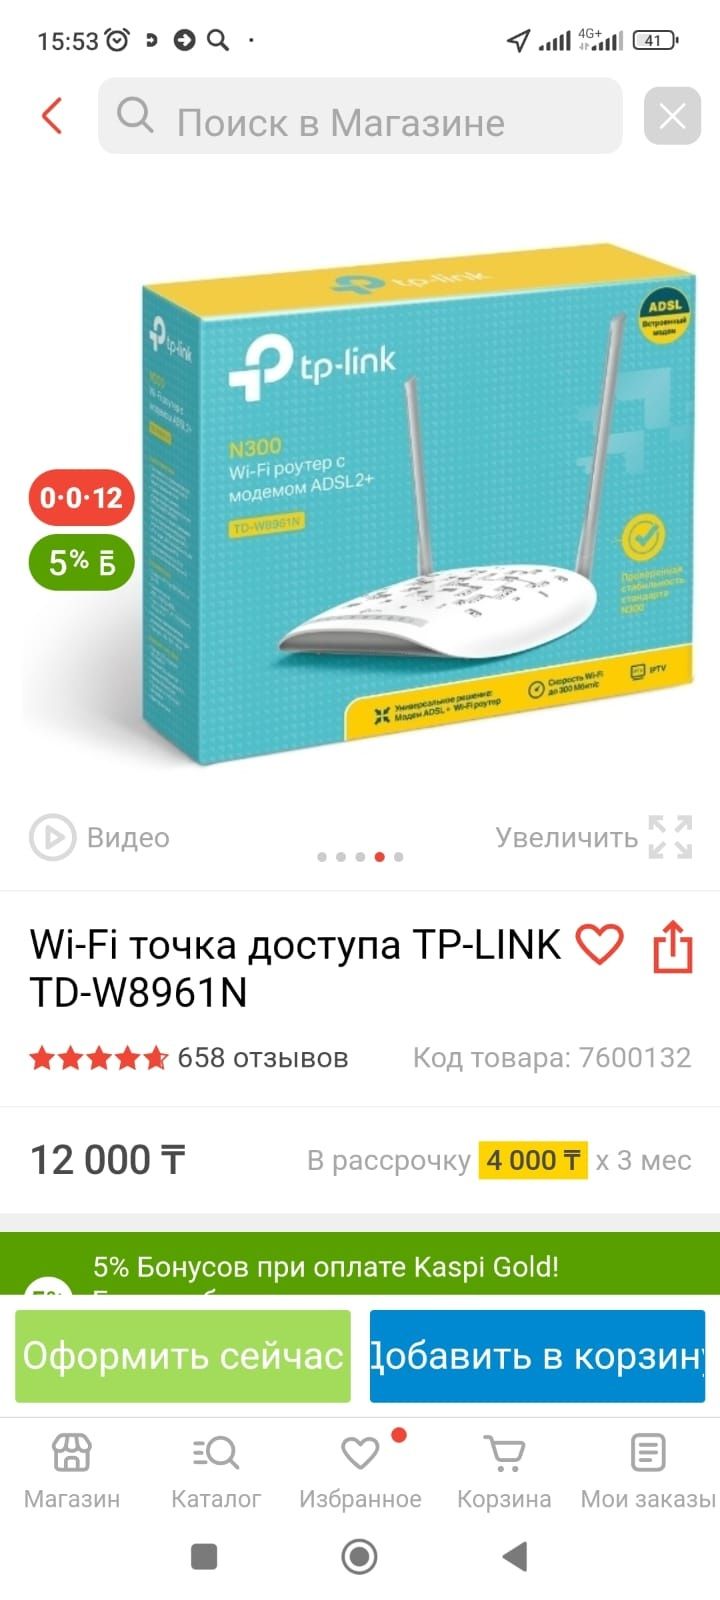 Wi-fi точка доступа TP-LINK TD -W8961N